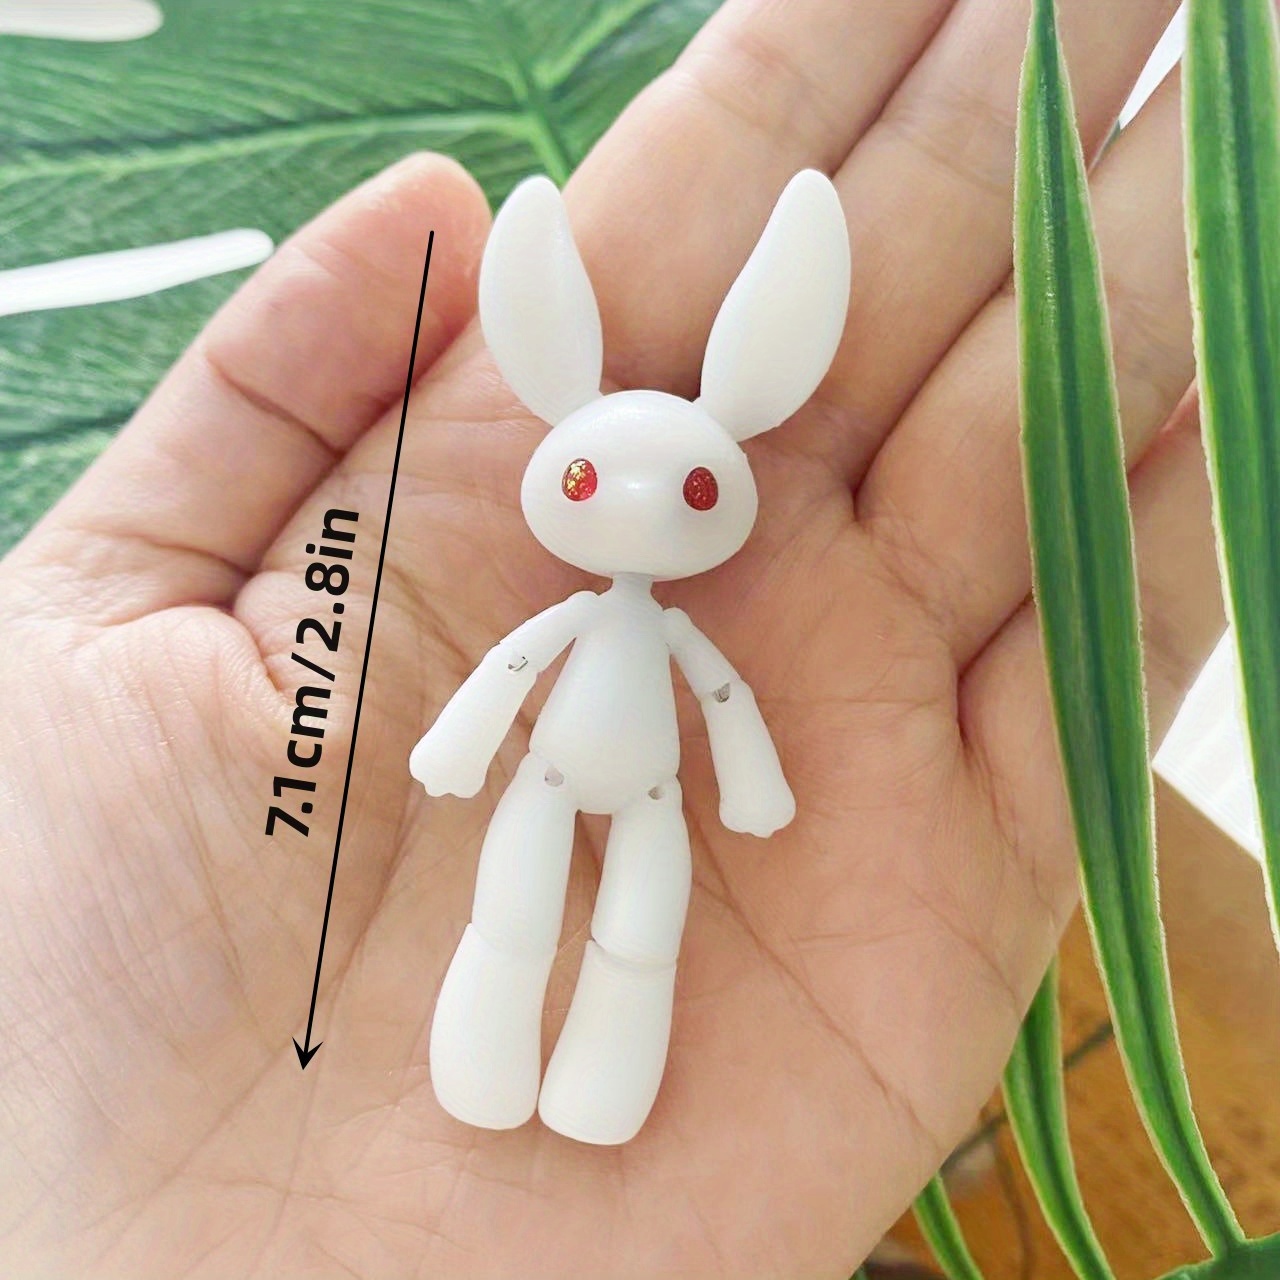 Rabbit doll